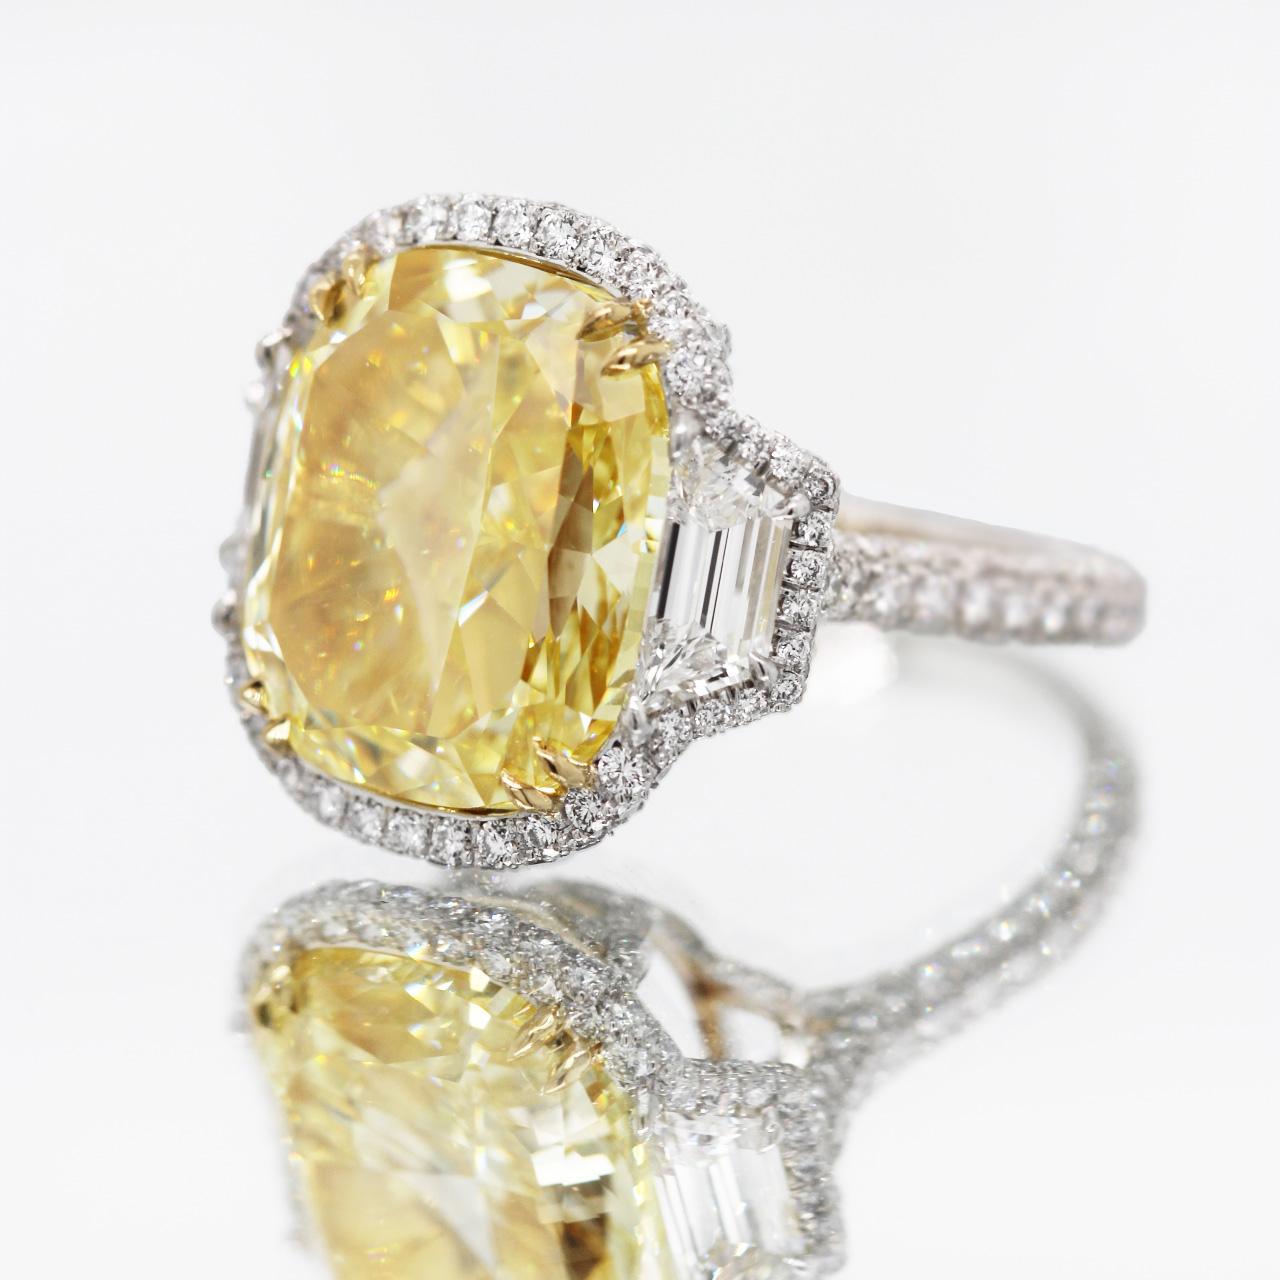 GIA-certified 15+ carat Fancy Intense Yellow cushion-cut diamond three-stone engagement ring. Trilogy ring feature a 15.15 carat natural, Fancy Intense Yellow cushion-cut center stone, set on 18 yellow gold and platinum. 

A halo of white melee